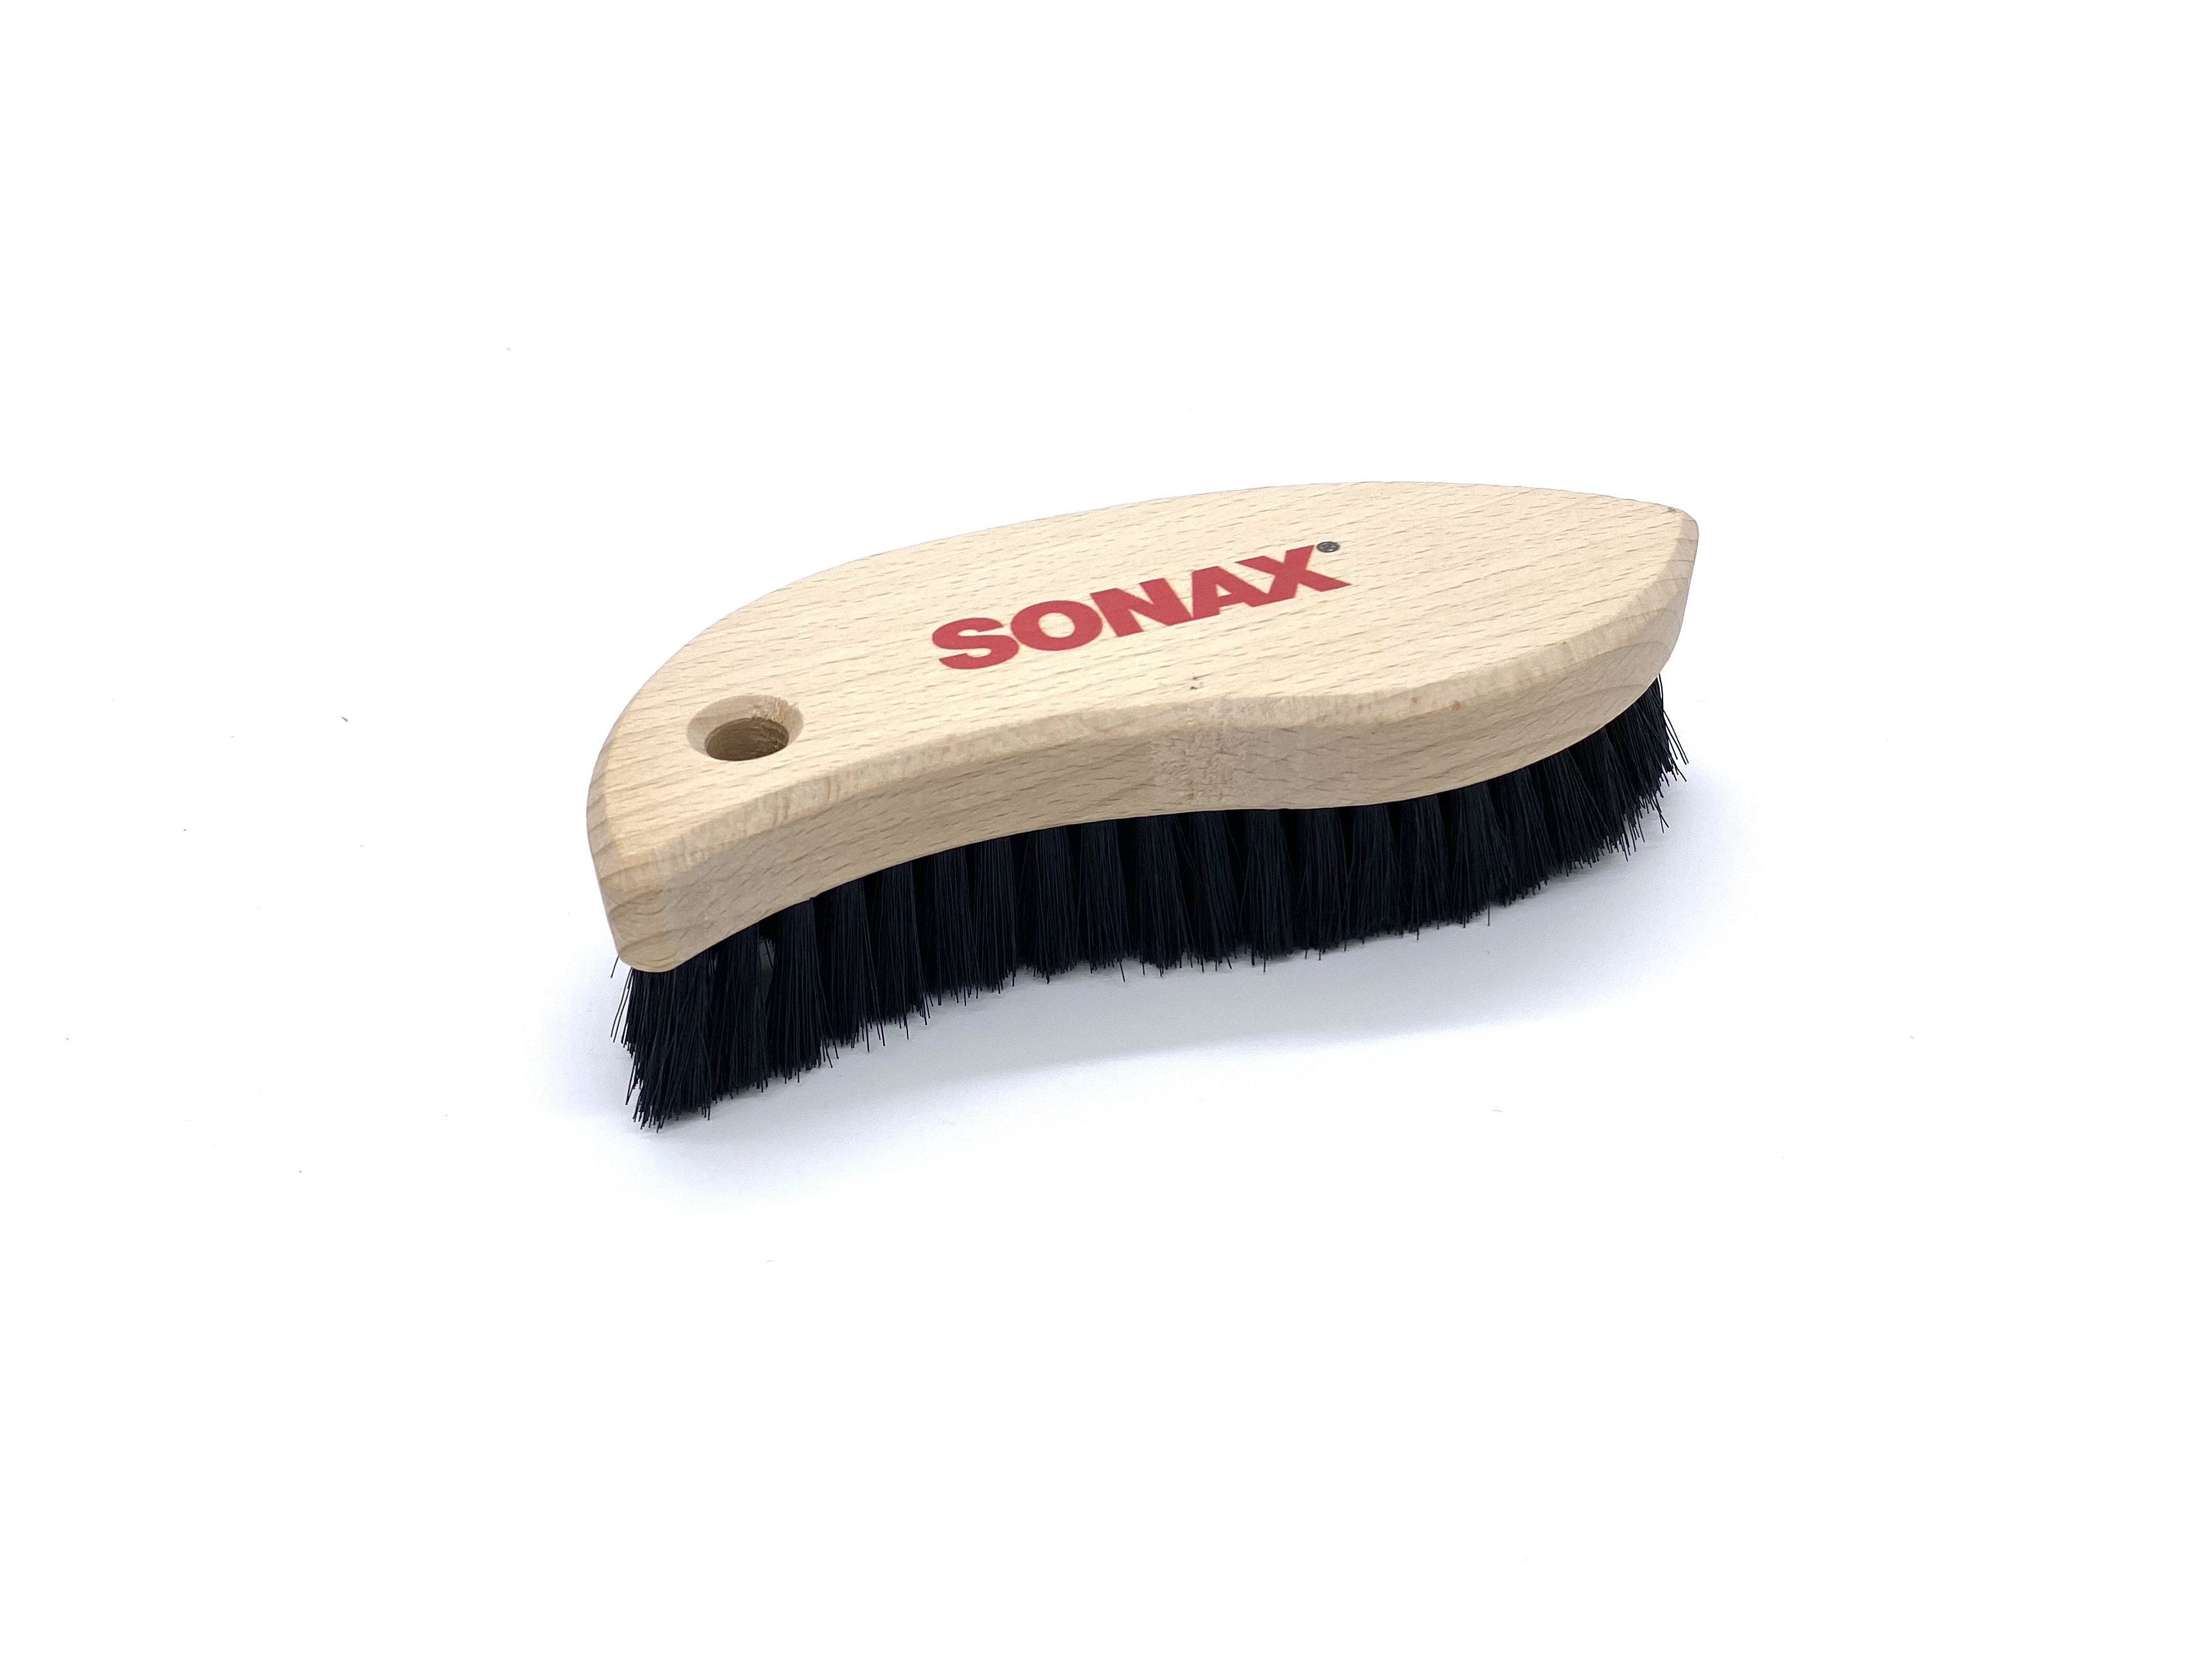 SONAX Foam Upholstery & Alcantara Cleaner (250ml)